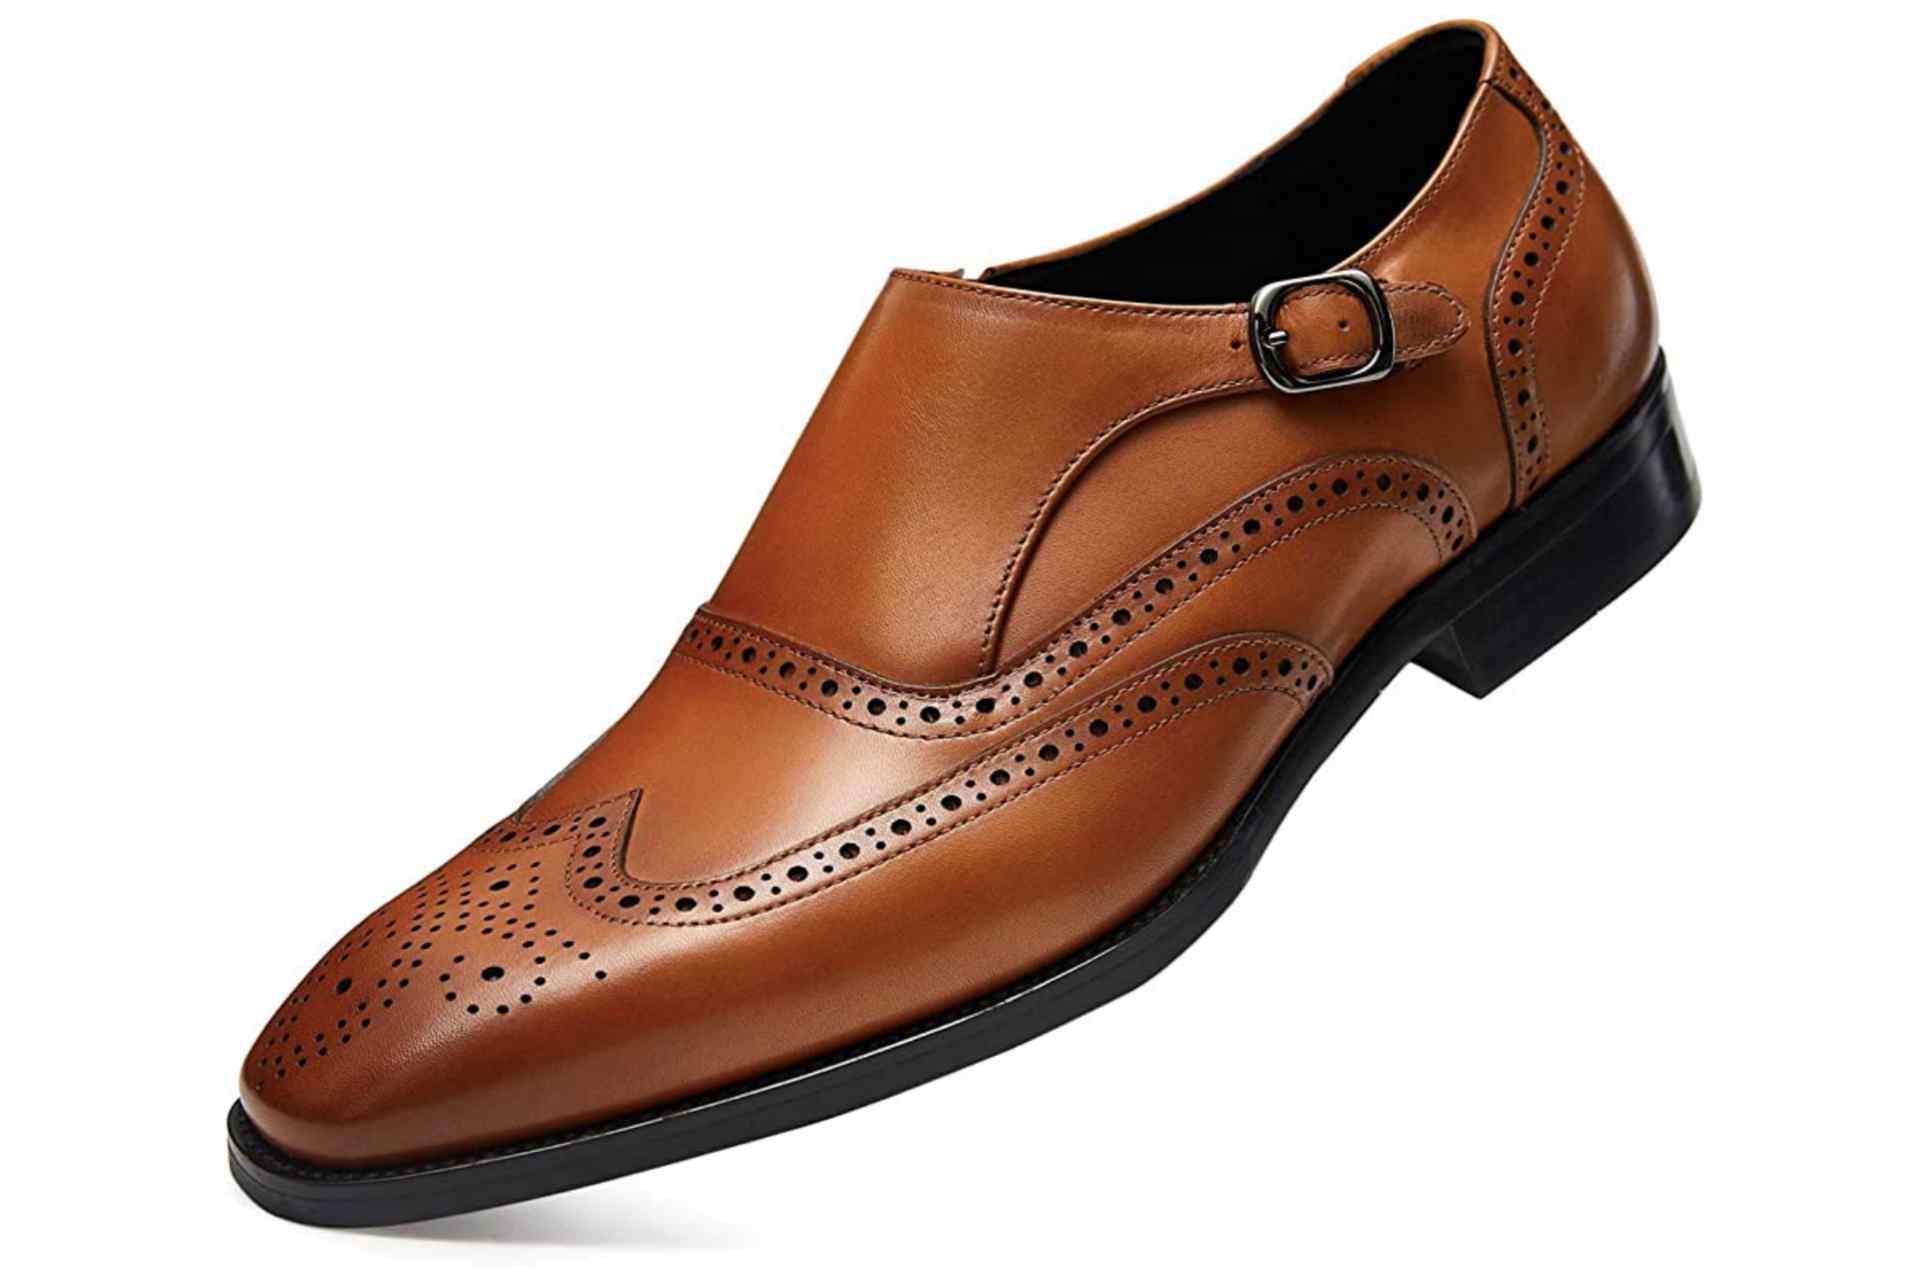 Best double Monk Strap Dress shoe for men